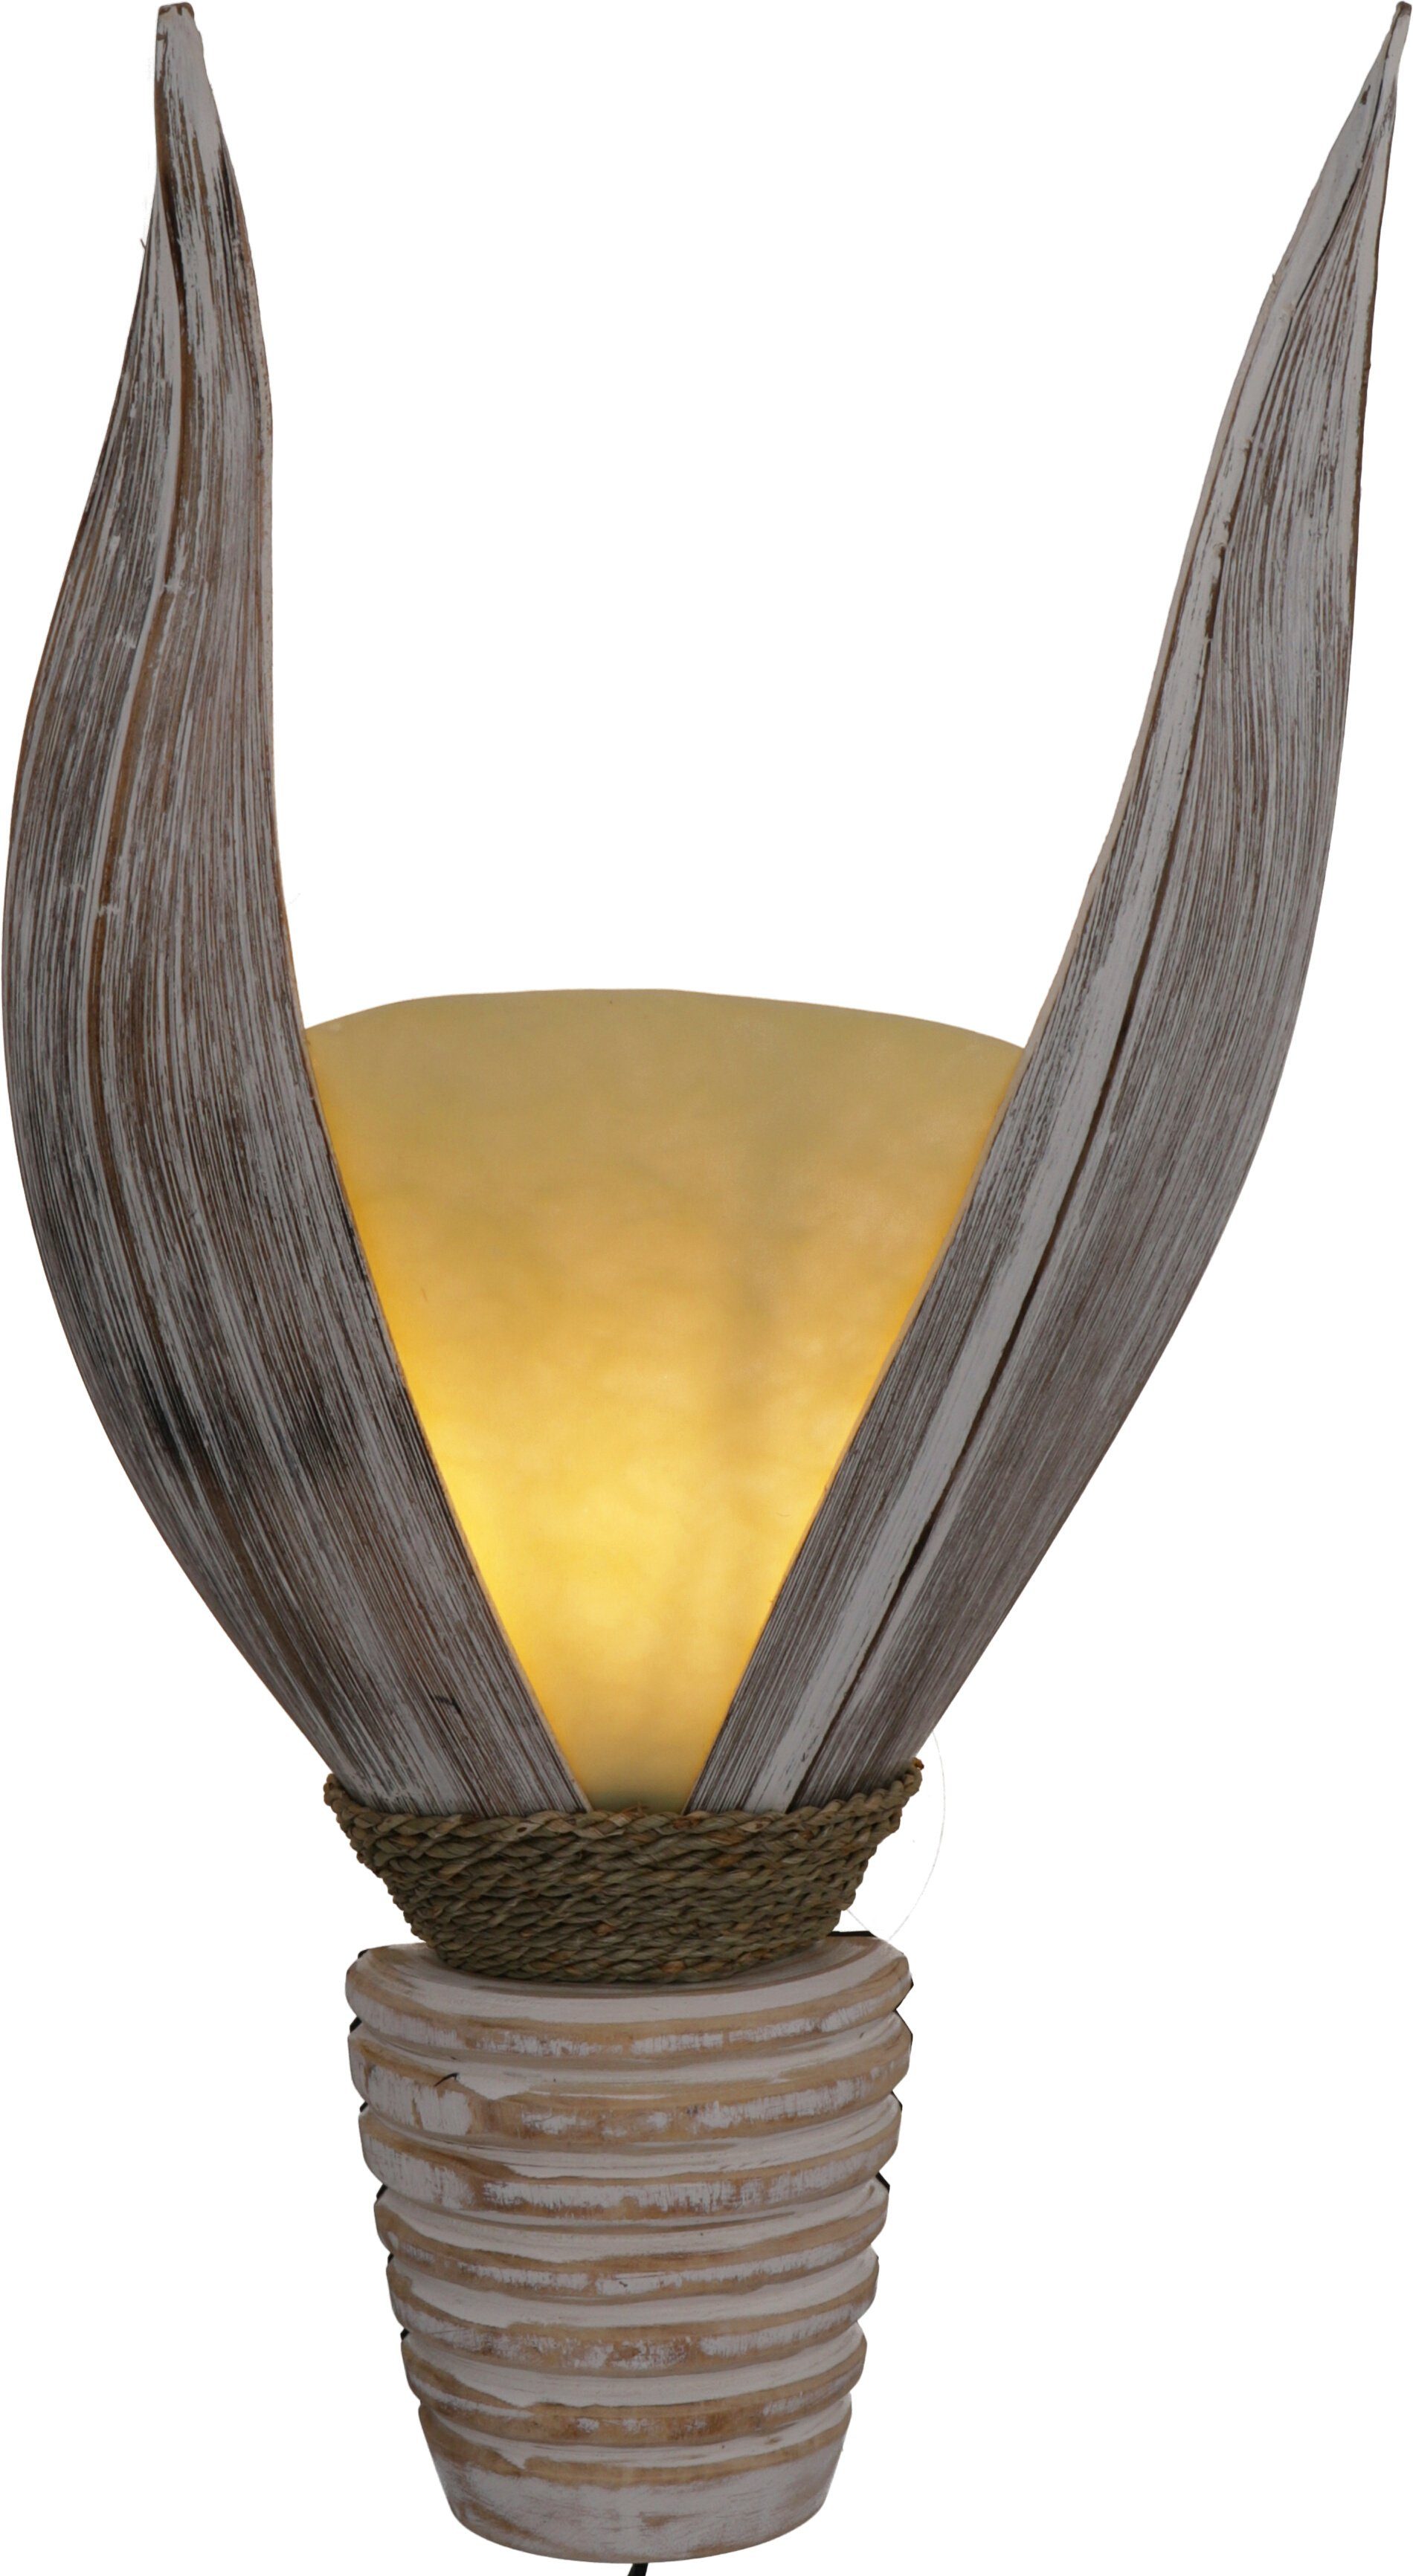 Wandleuchte Bali Guru-Shop handgefertigt.., Modell Wandlampe, Palmas Leuchtmittel inklusive in nicht Las Palmenblatt